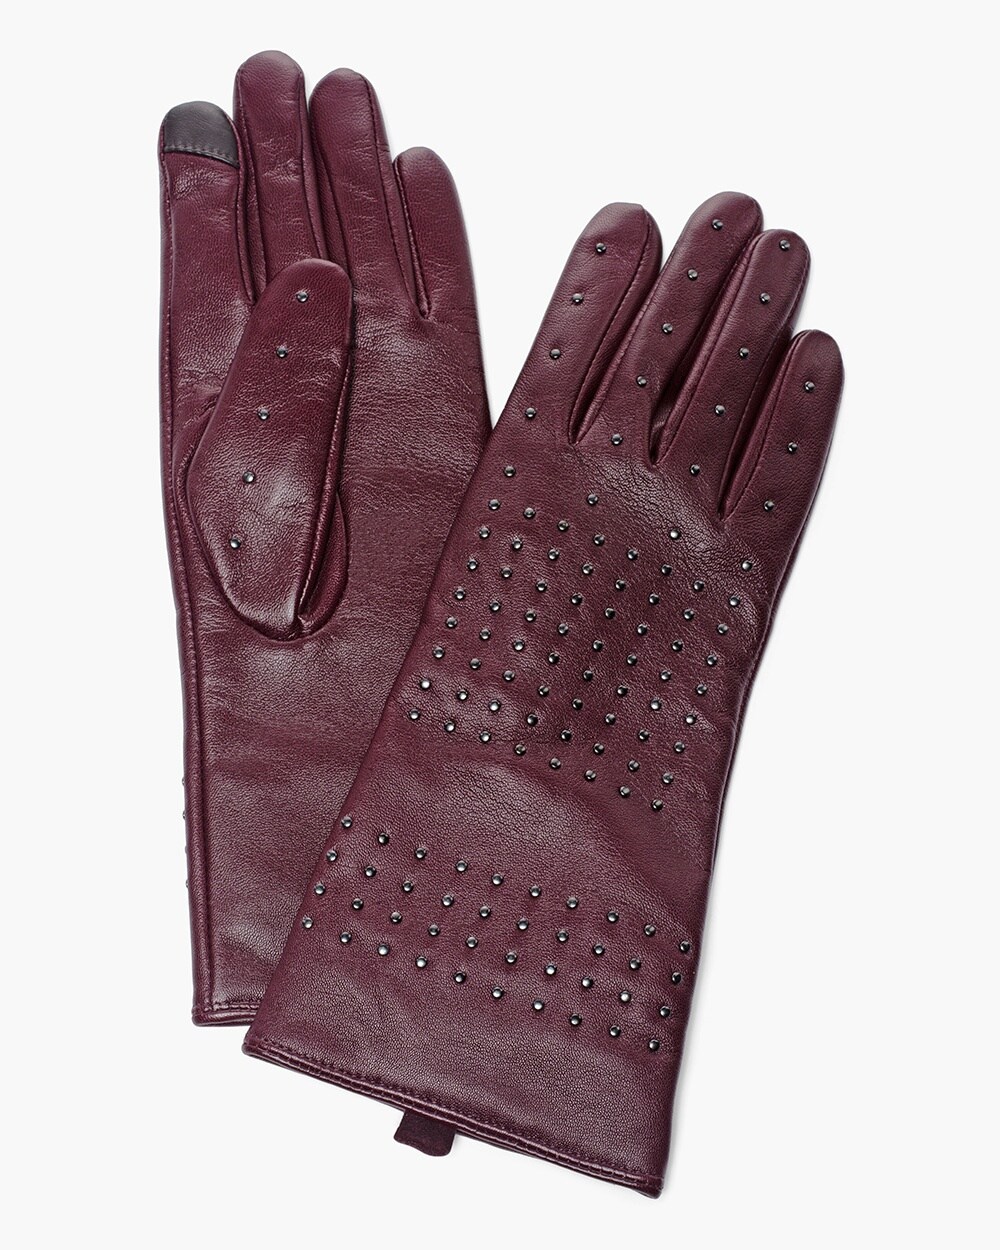 Studded Statement Gloves